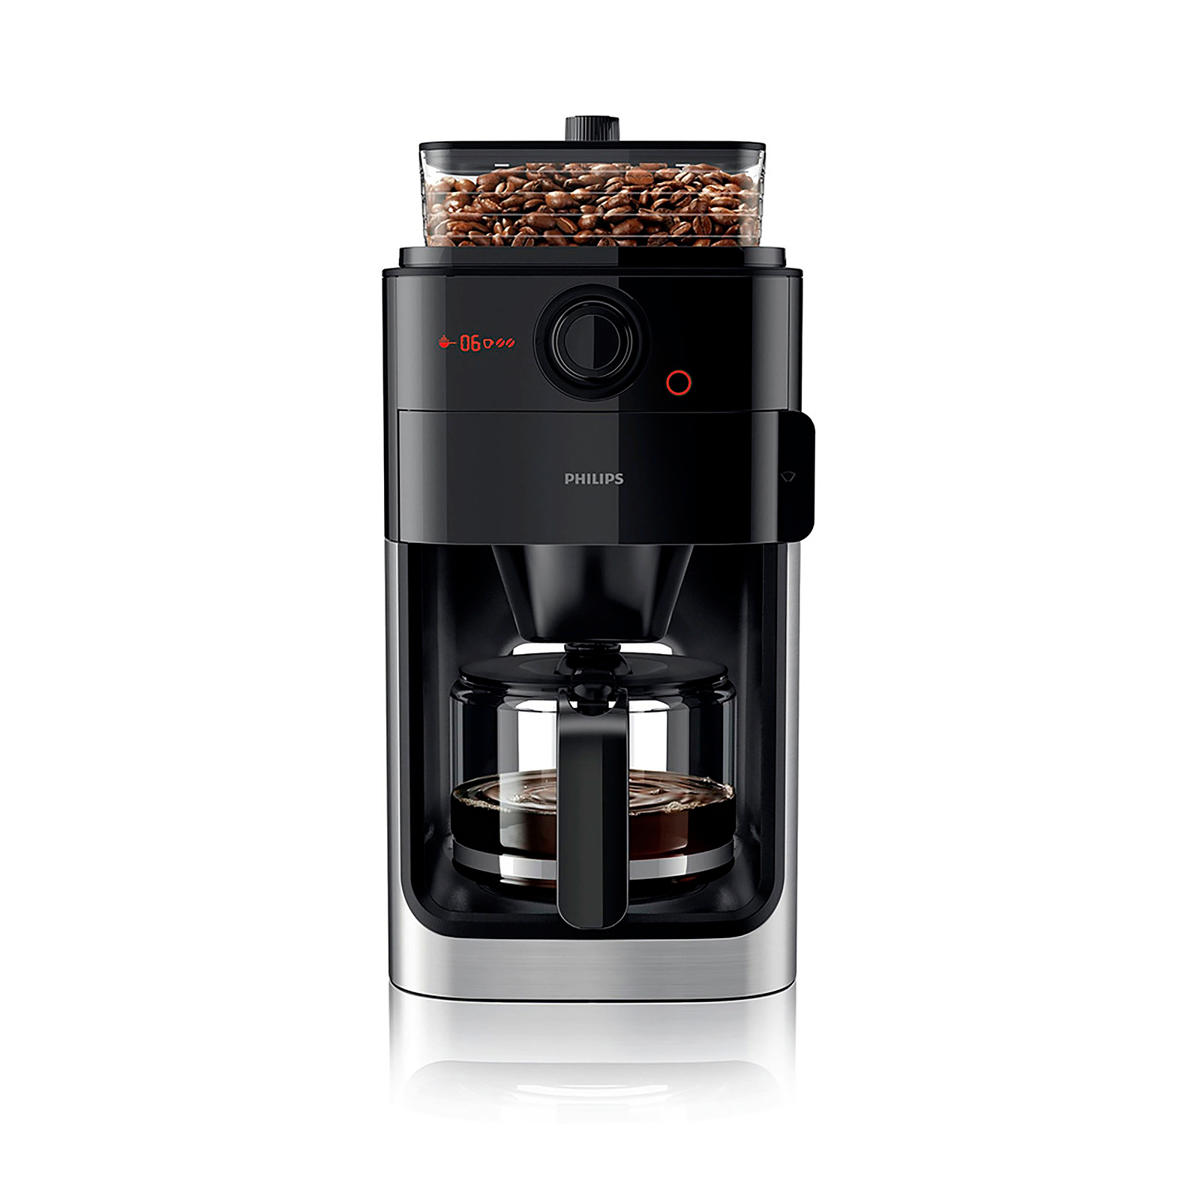 HD7767/00 Grind & Brew koffiezetapparaat | wehkamp